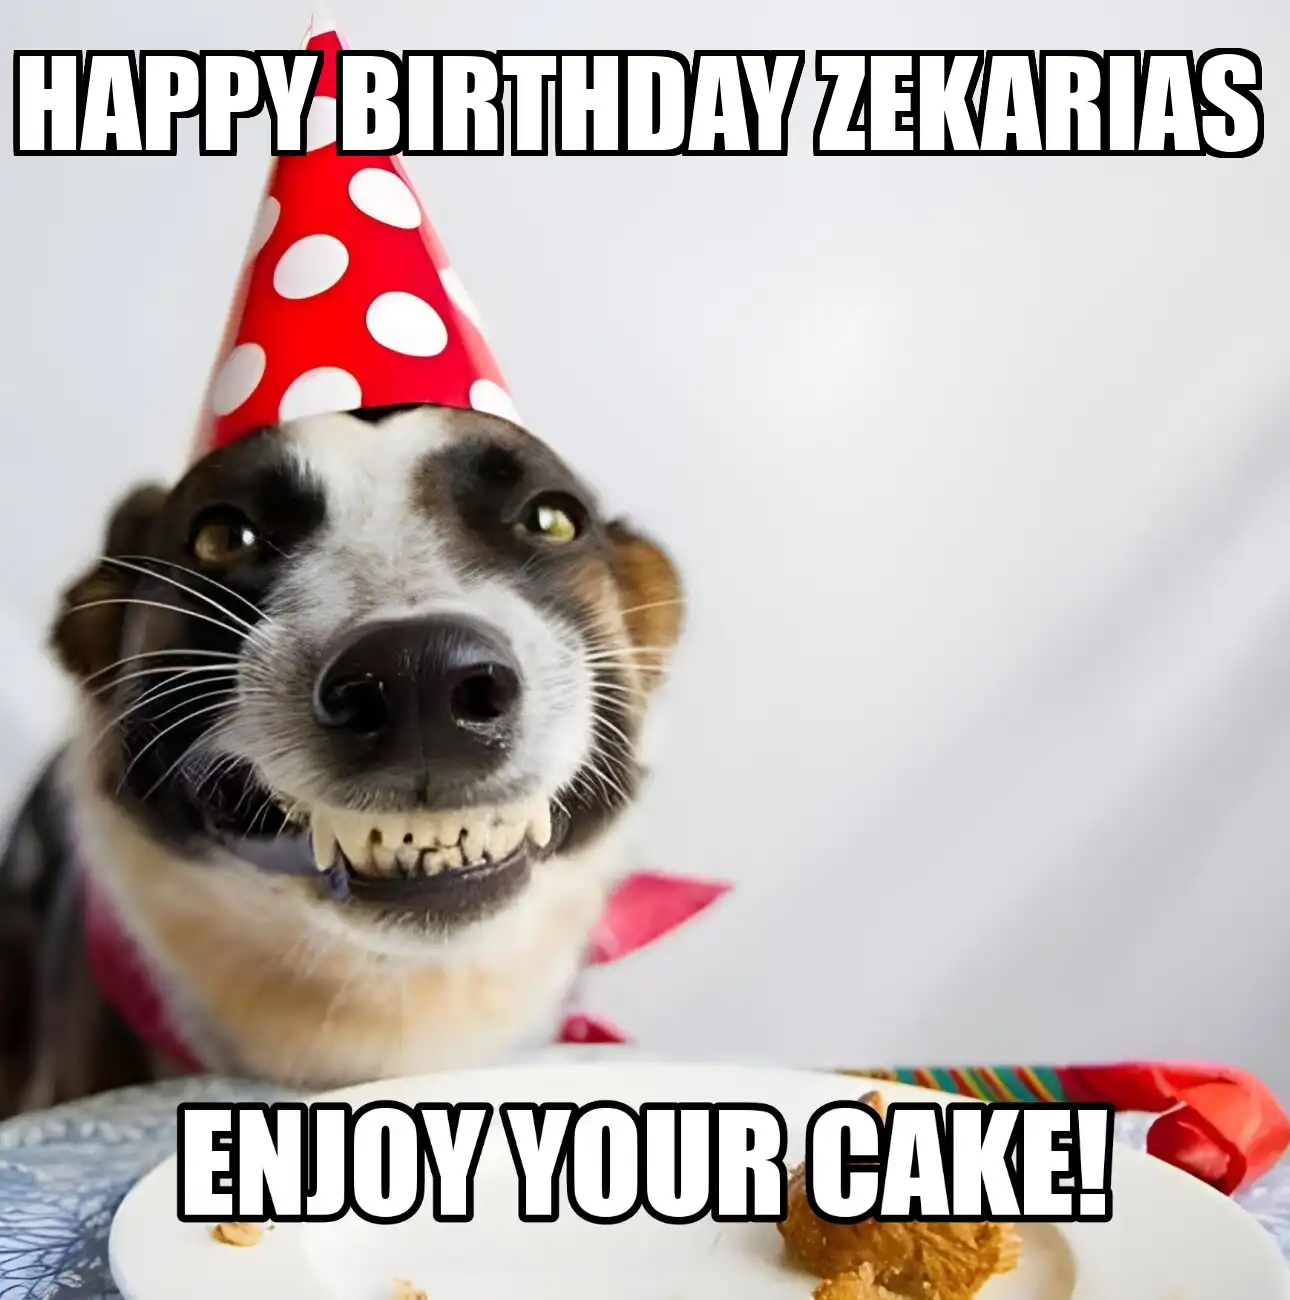 Happy Birthday Zekarias Enjoy Your Cake Dog Meme